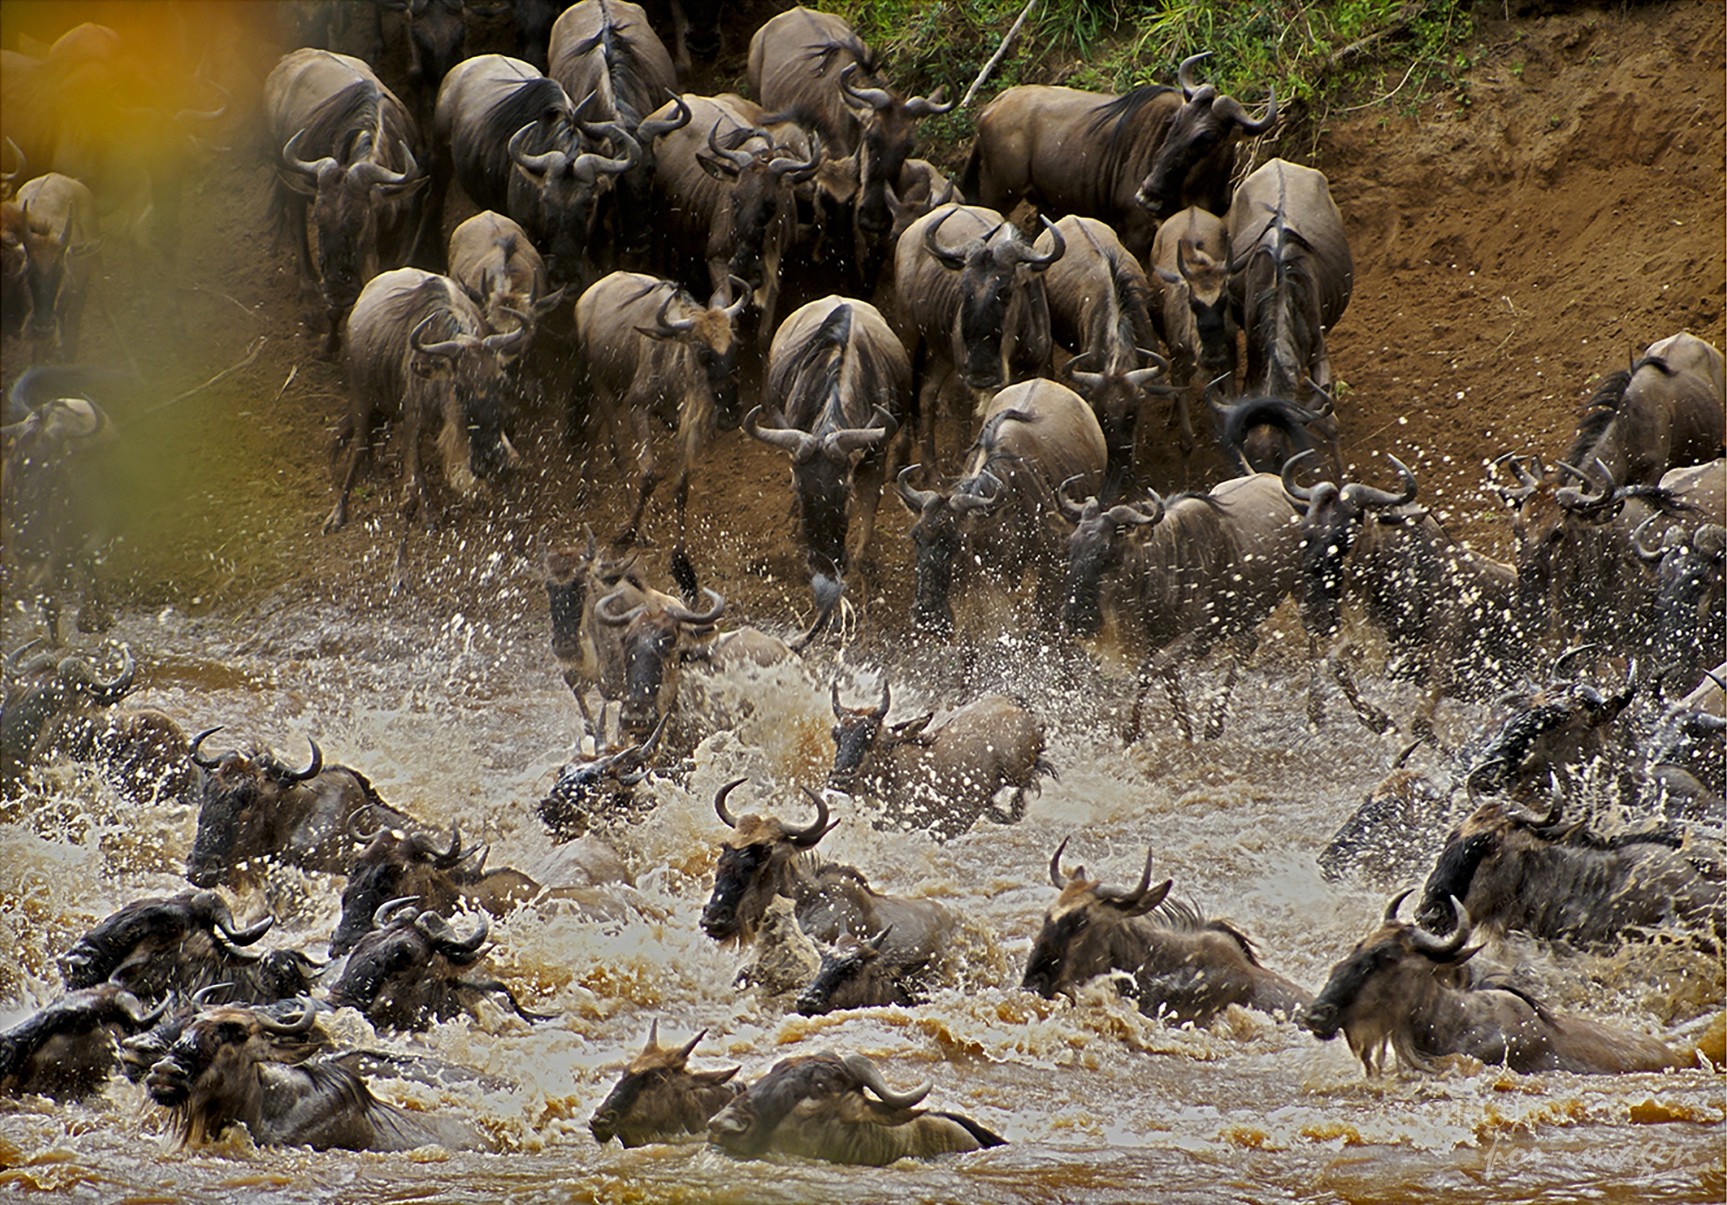 Ñuss cruzando el Río Massai Mara Kenya / Graciela Lavado